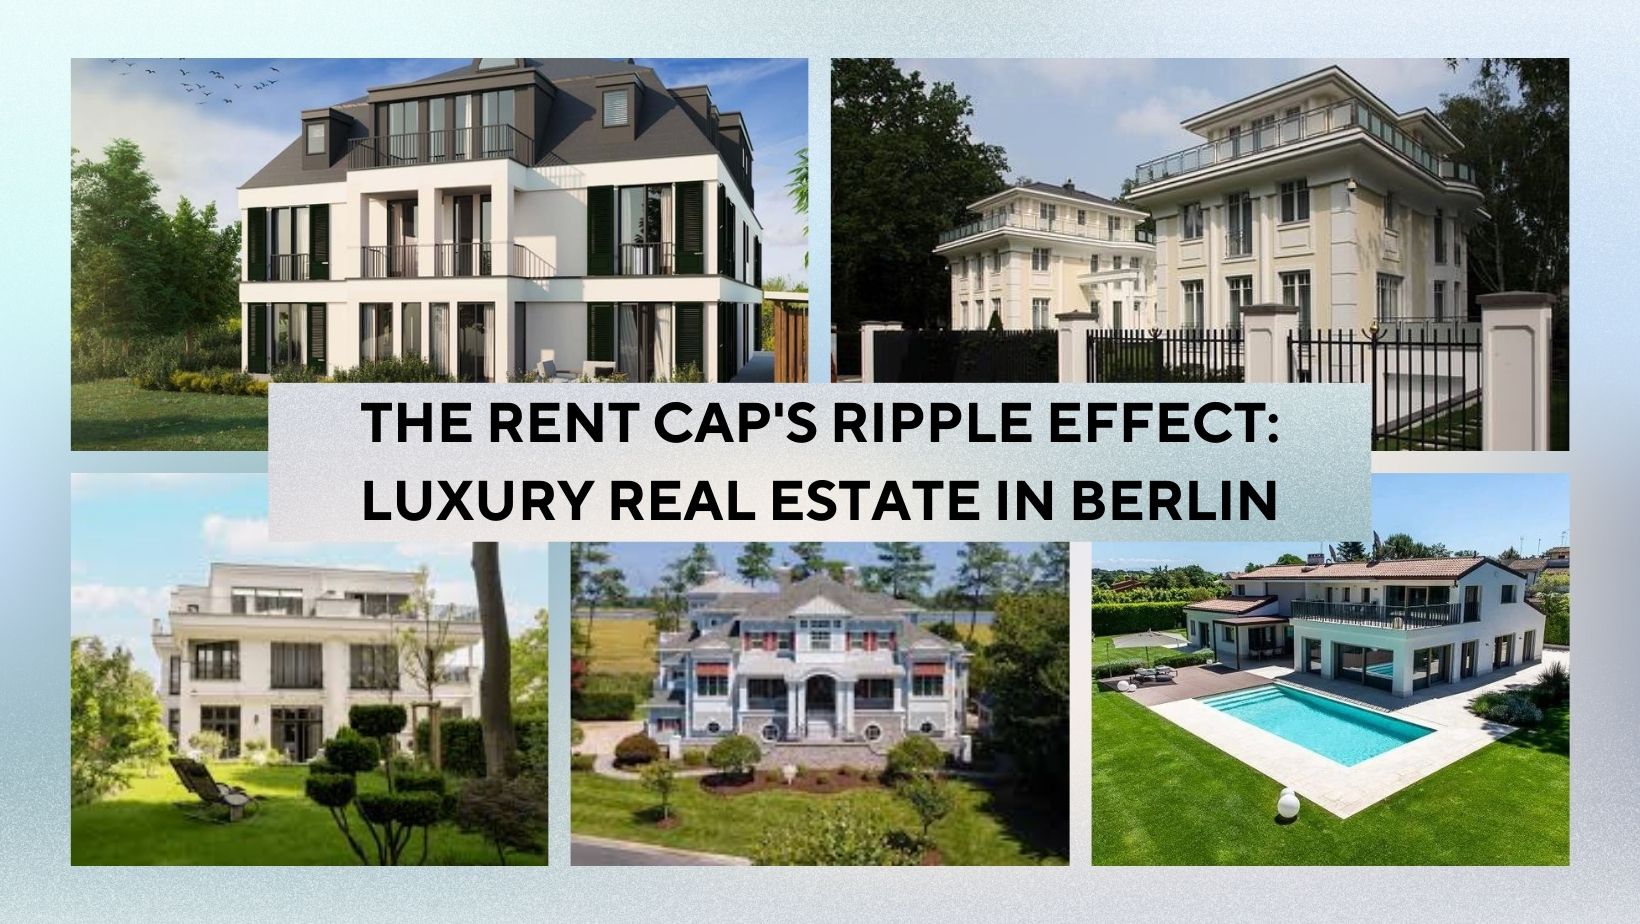 The rent cap's ripple effect luxury real estate in berlin.